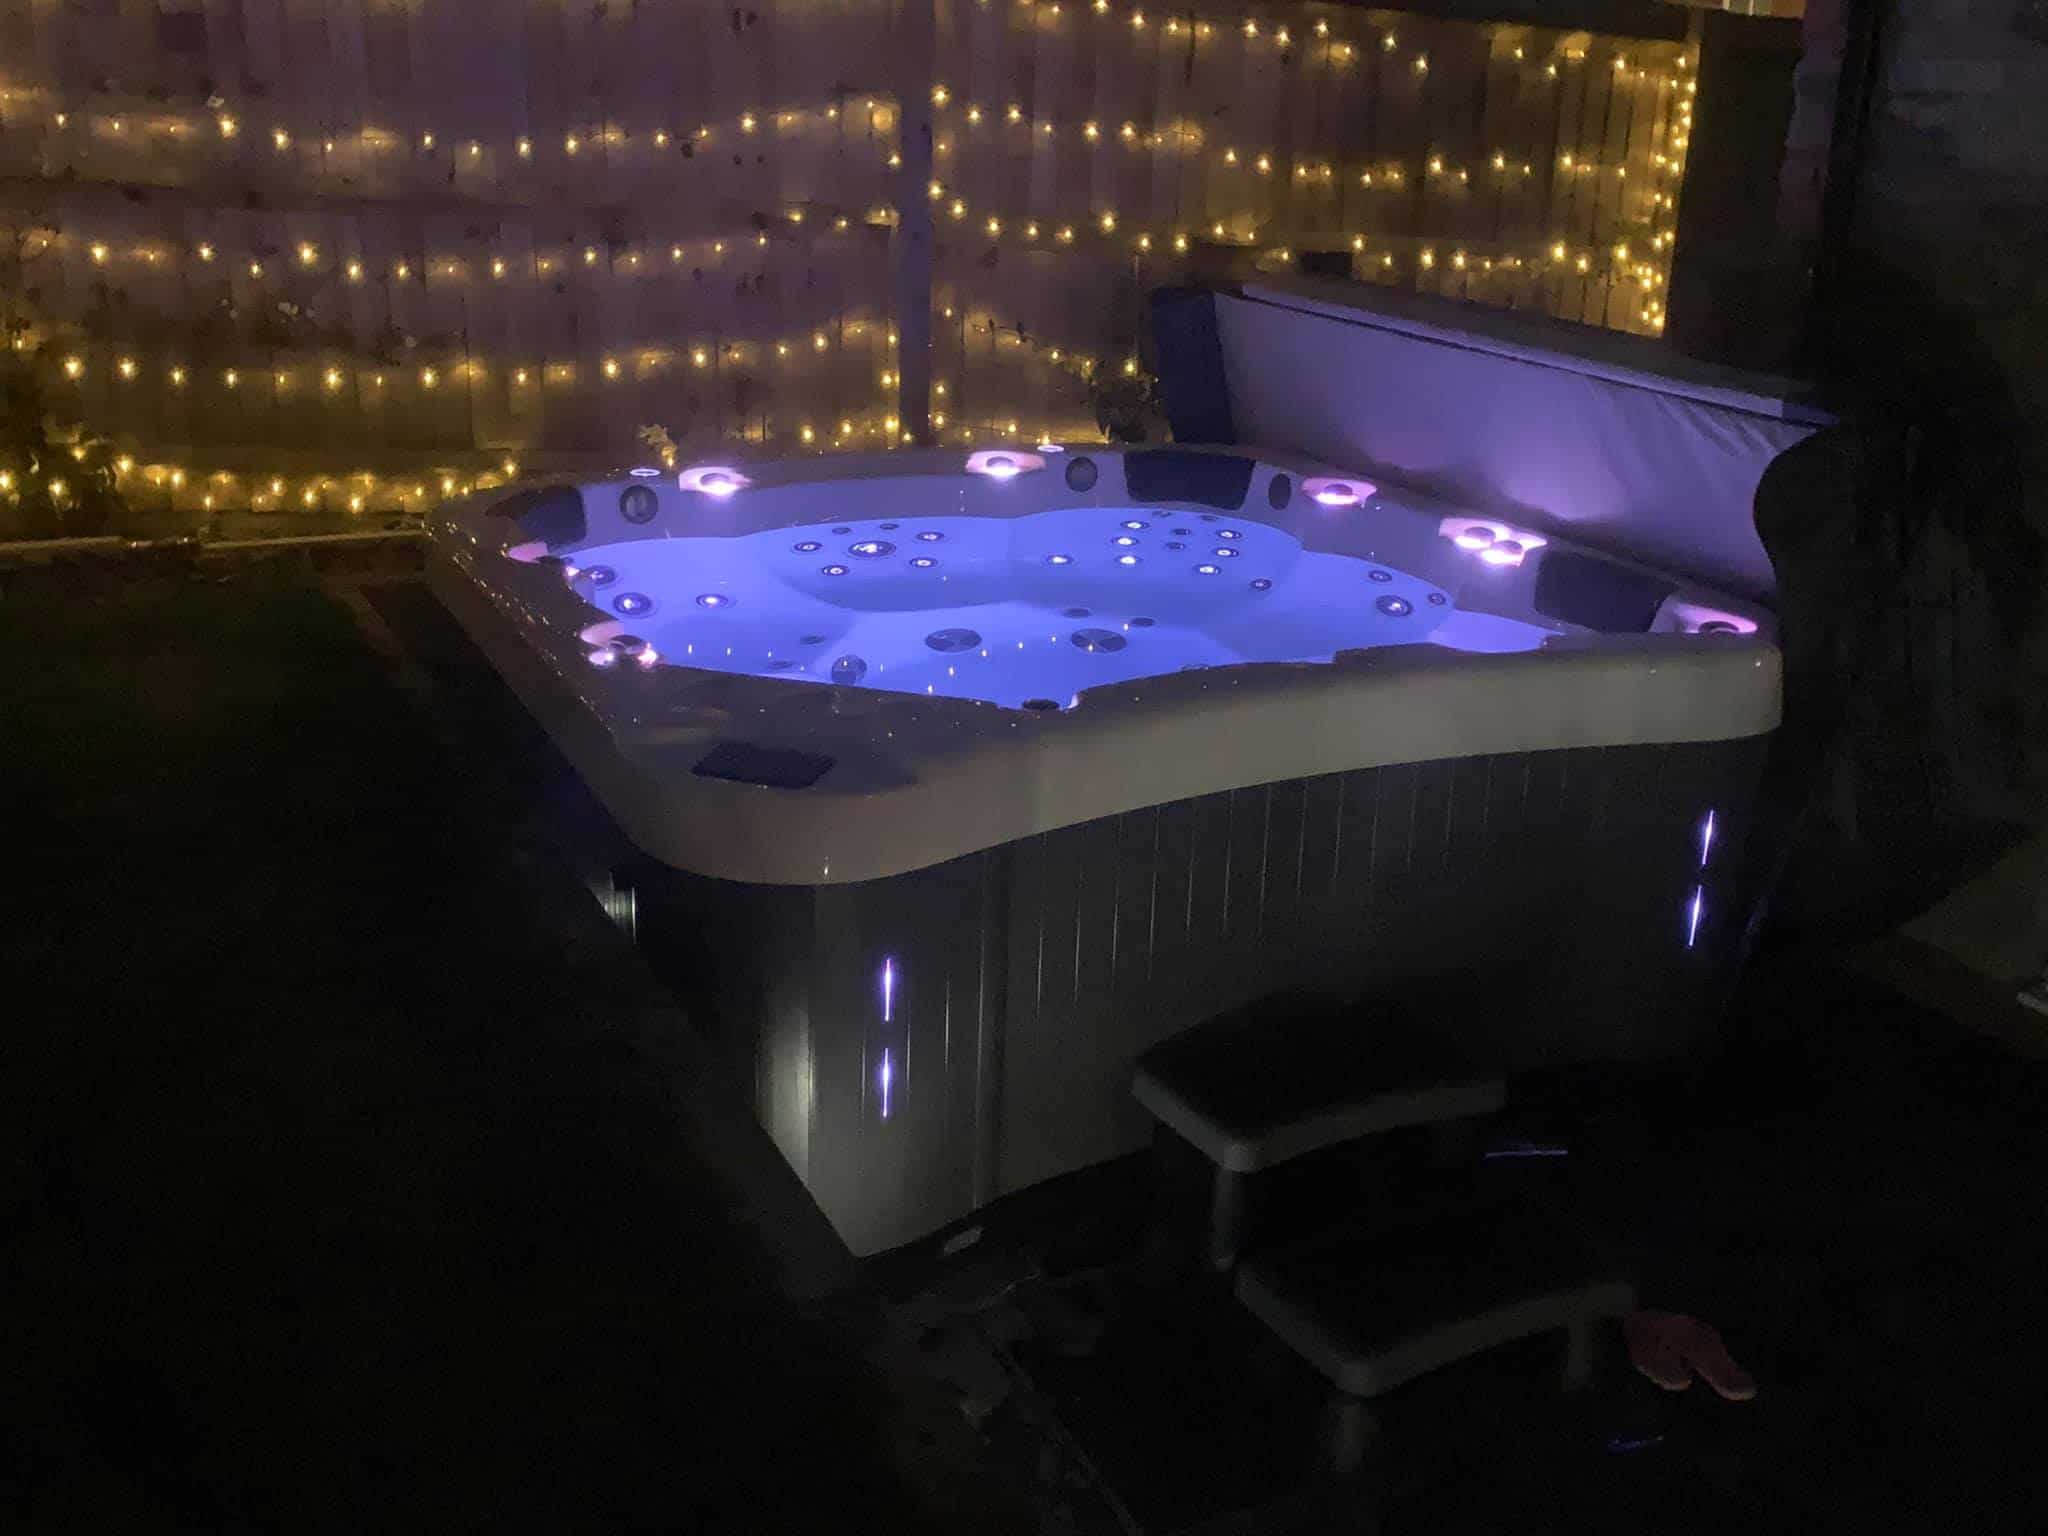 Be Well E680 Luxury hot tub